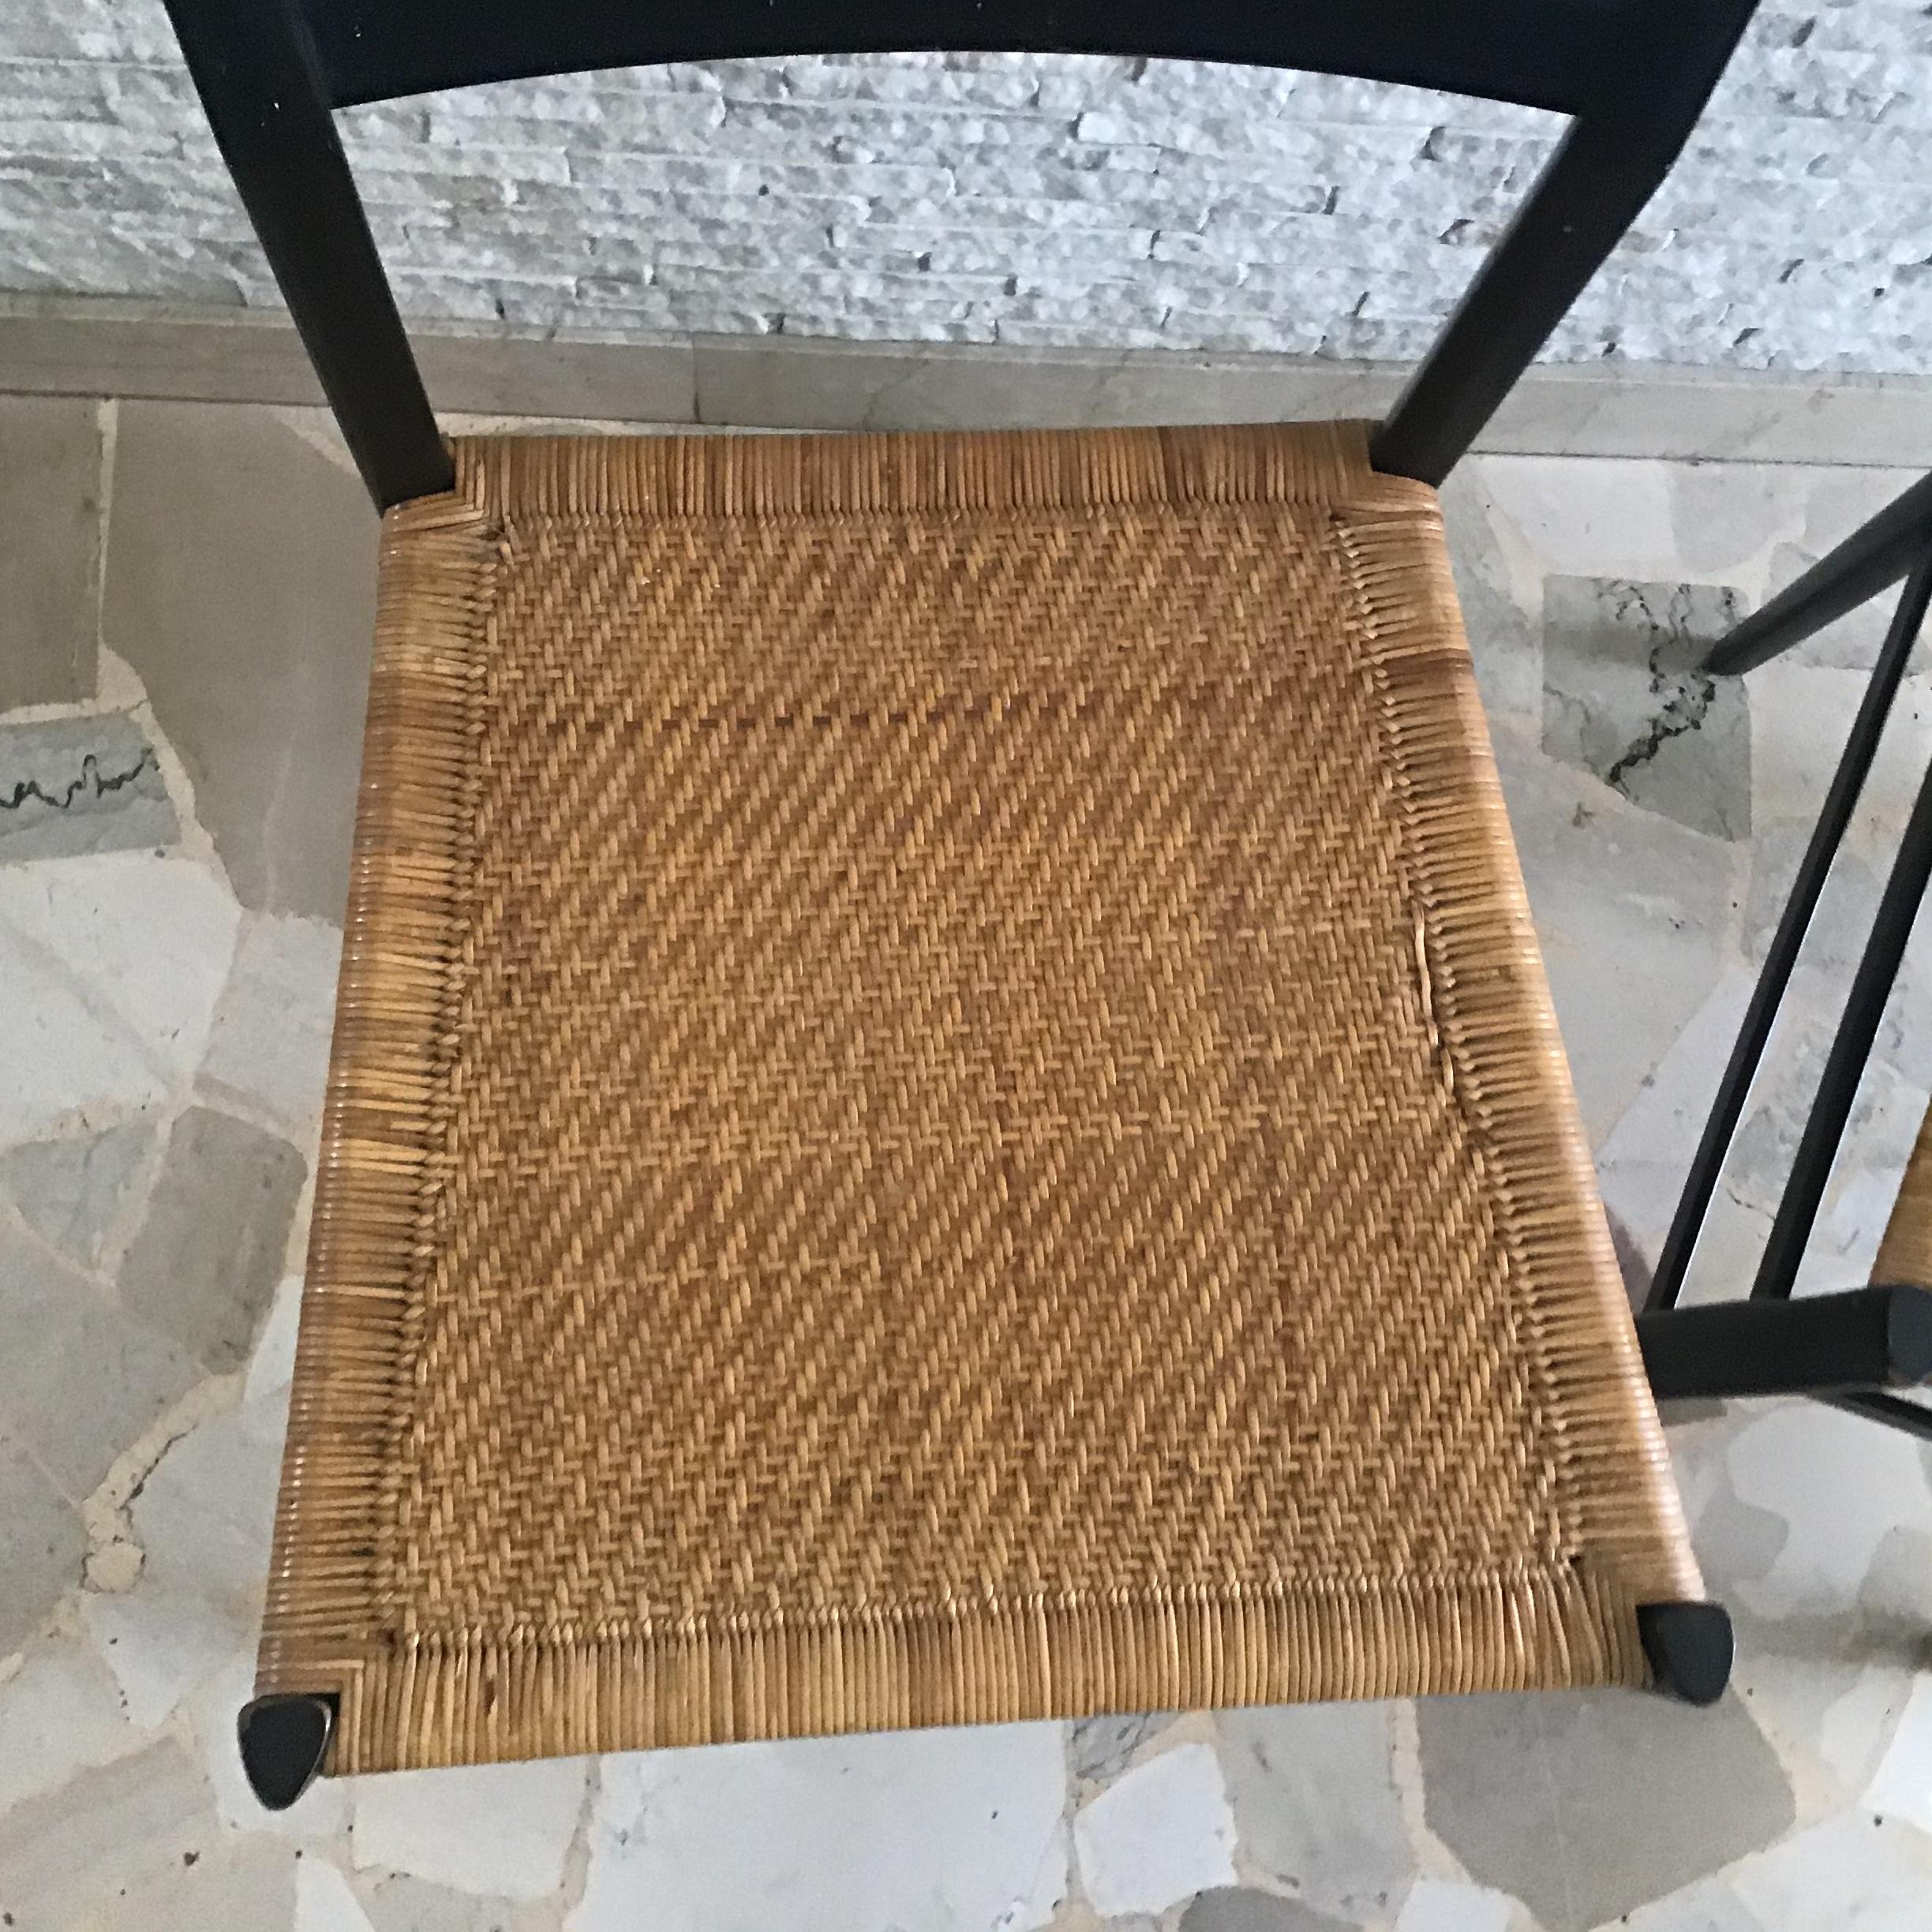 Gio Ponti “ Superleggera” N. 4, Chair Wood Straw Padding, 1950, Italy For Sale 9